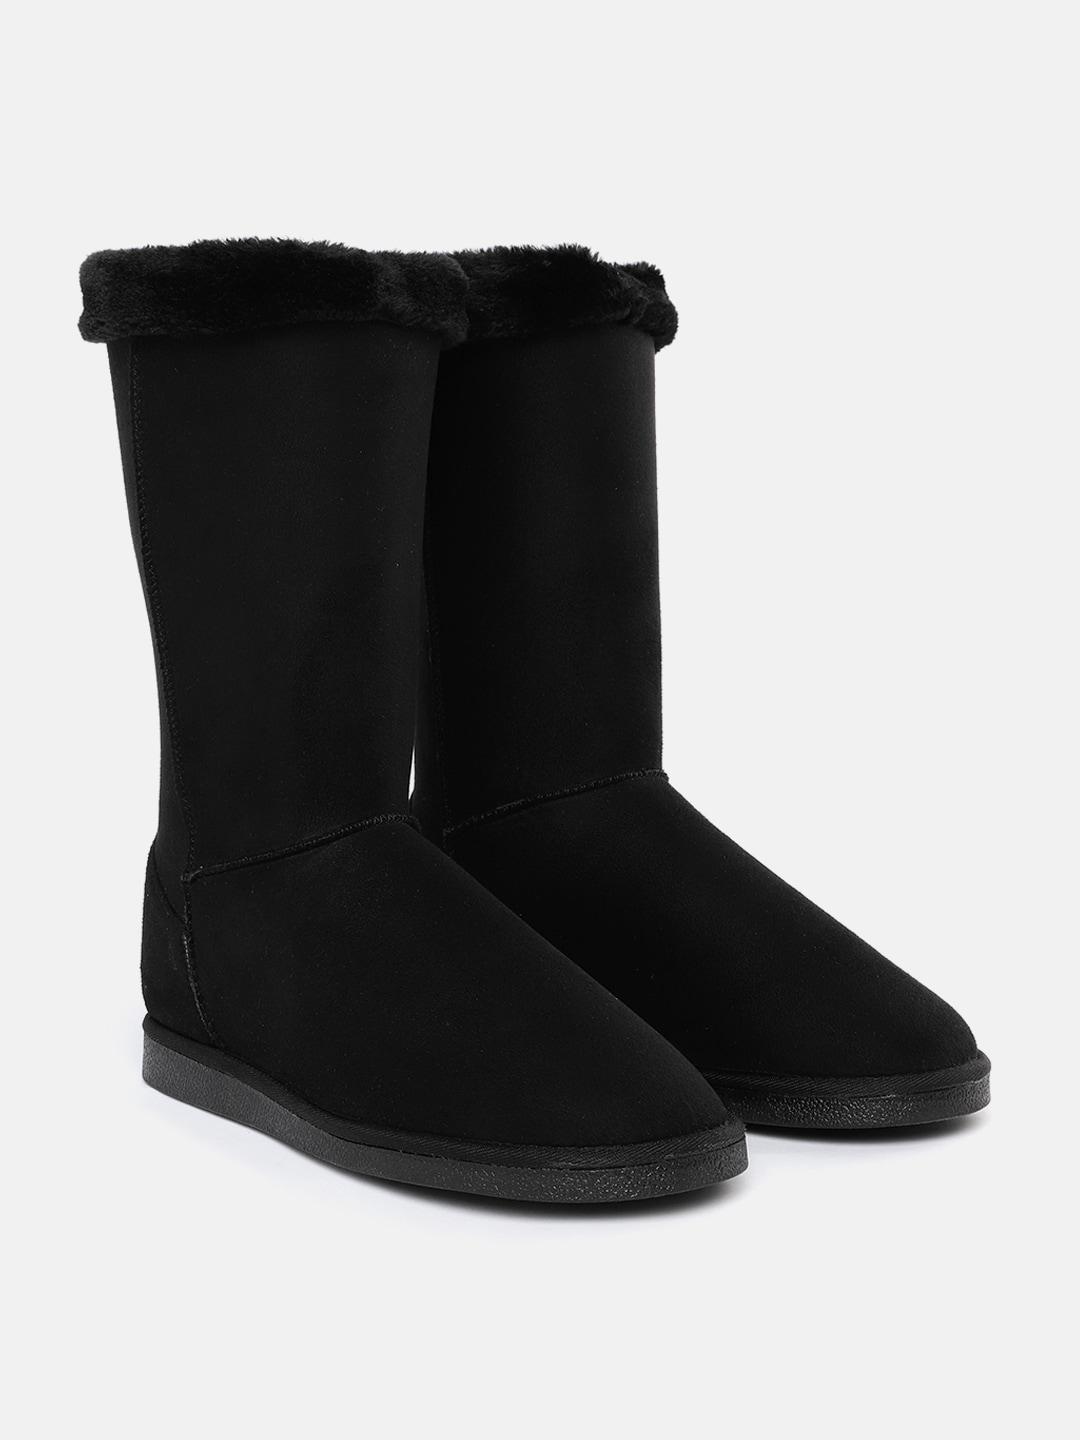 carlton london women black high -top flat winter boots with faux fur trim detail